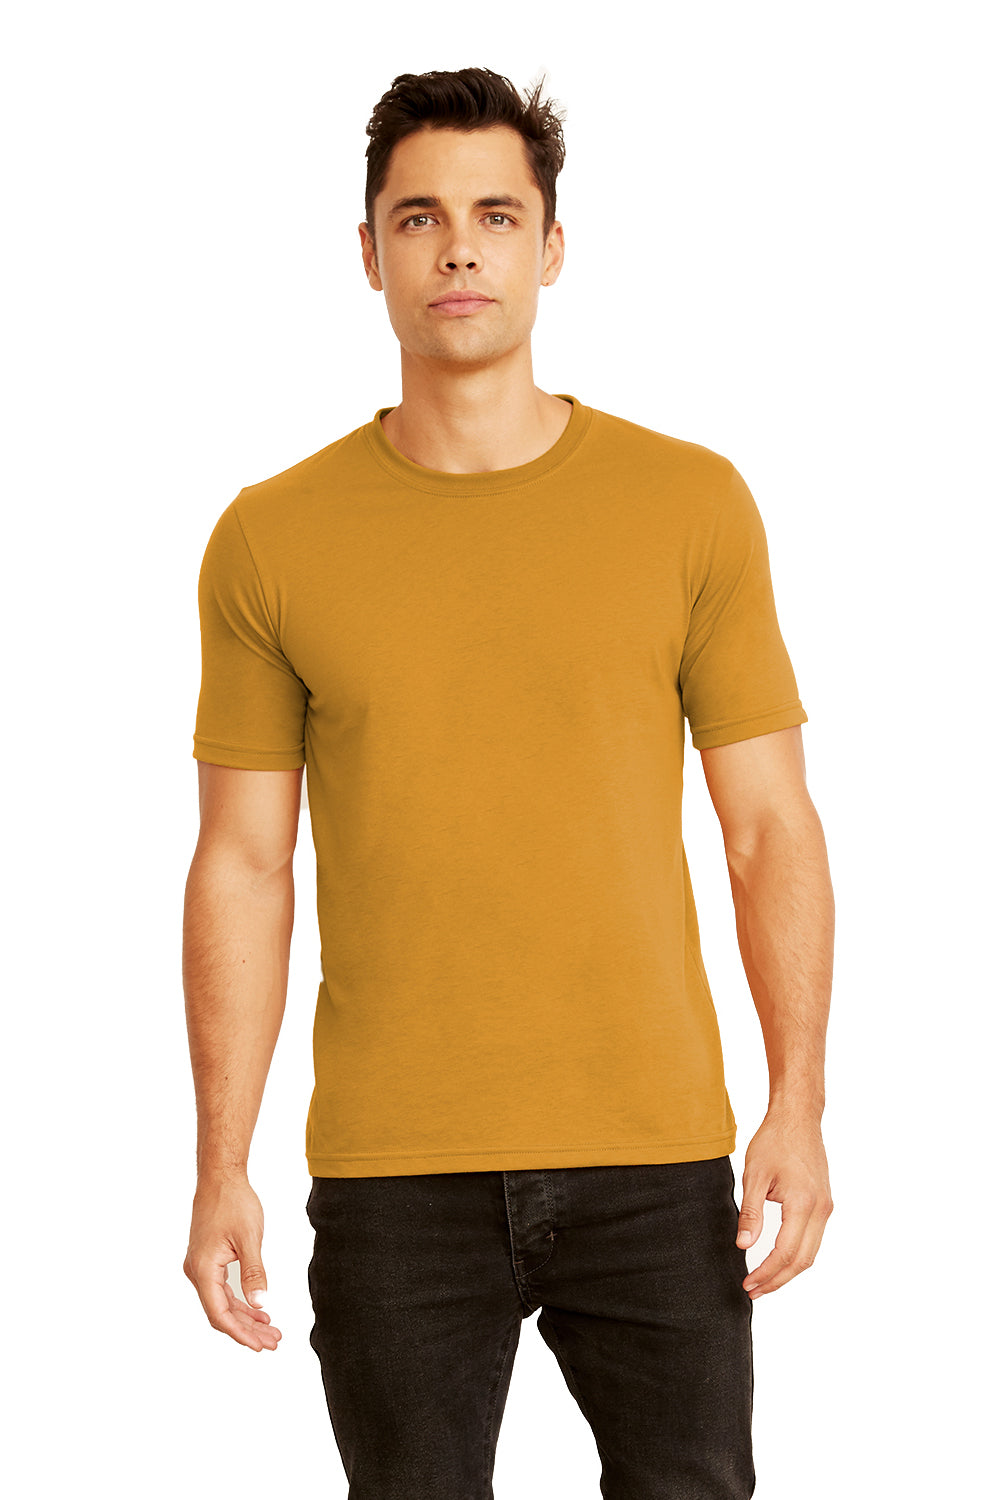 Next Level 3600 Mens Fine Jersey Short Sleeve Crewneck T-Shirt Antique Gold Front